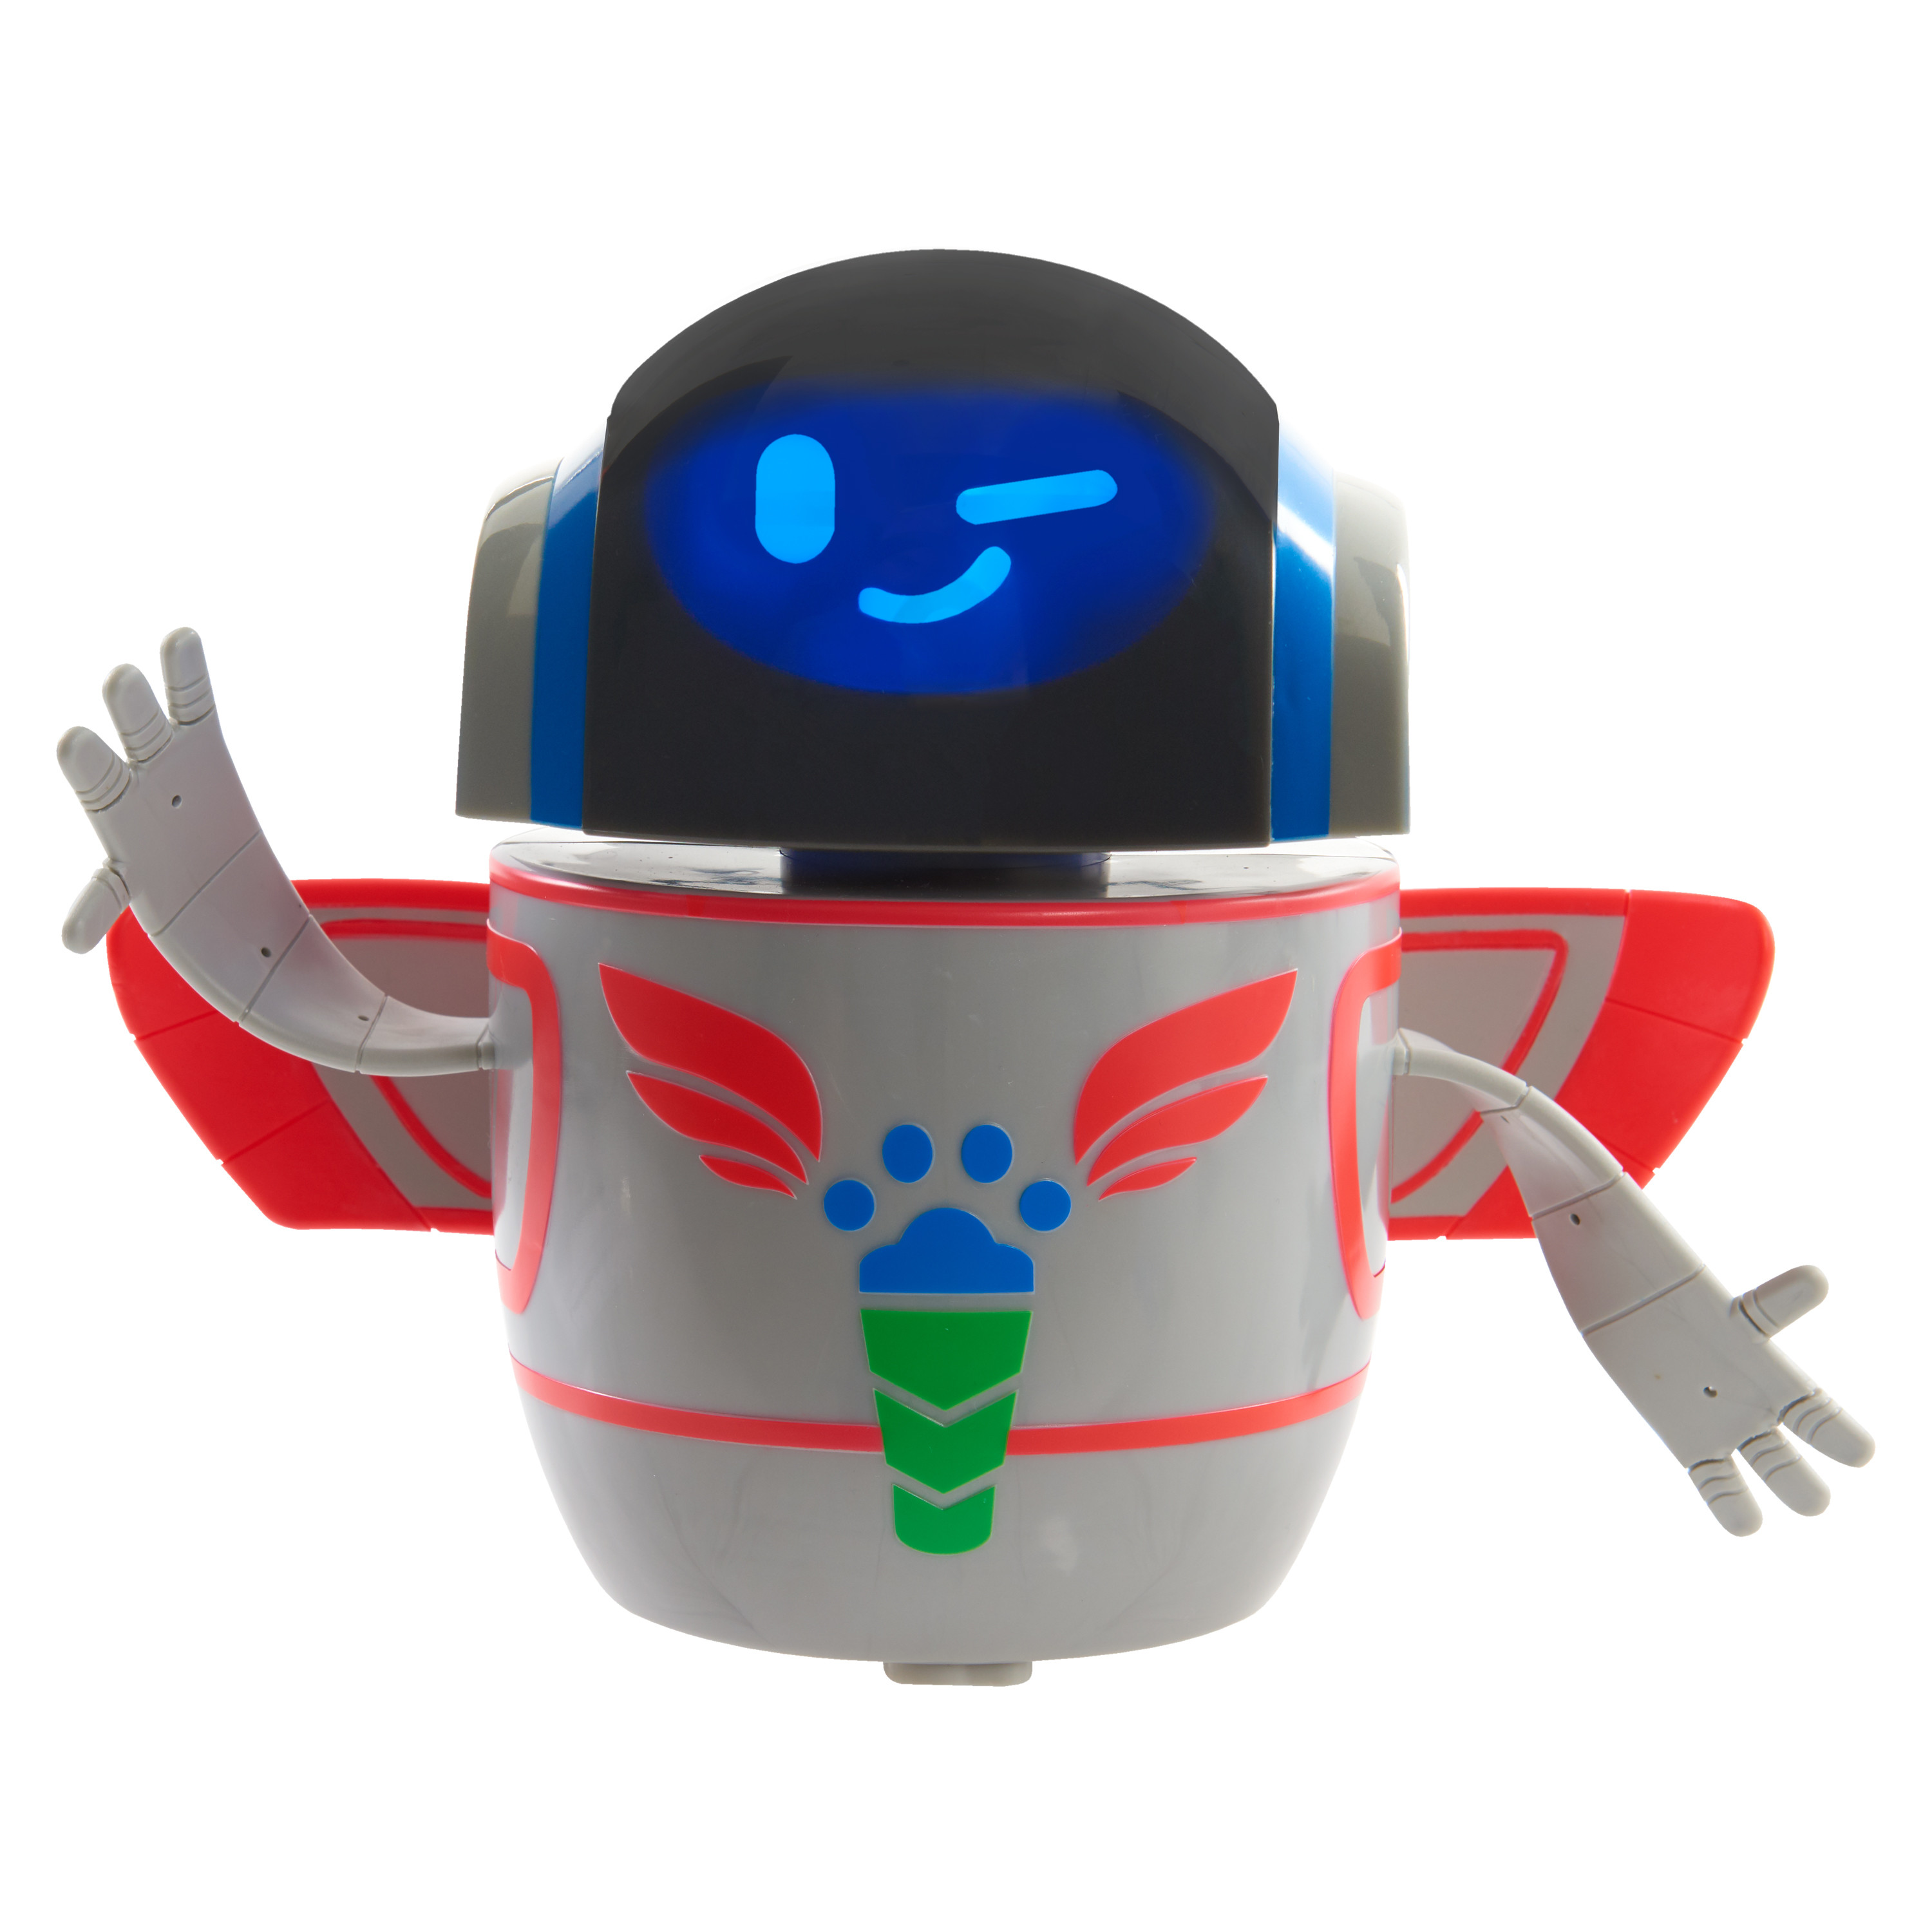 PJ Masks Lights & Sounds PJ Robot,  Kids Toys for Ages 3 Up, Gifts and Presents - image 1 of 2